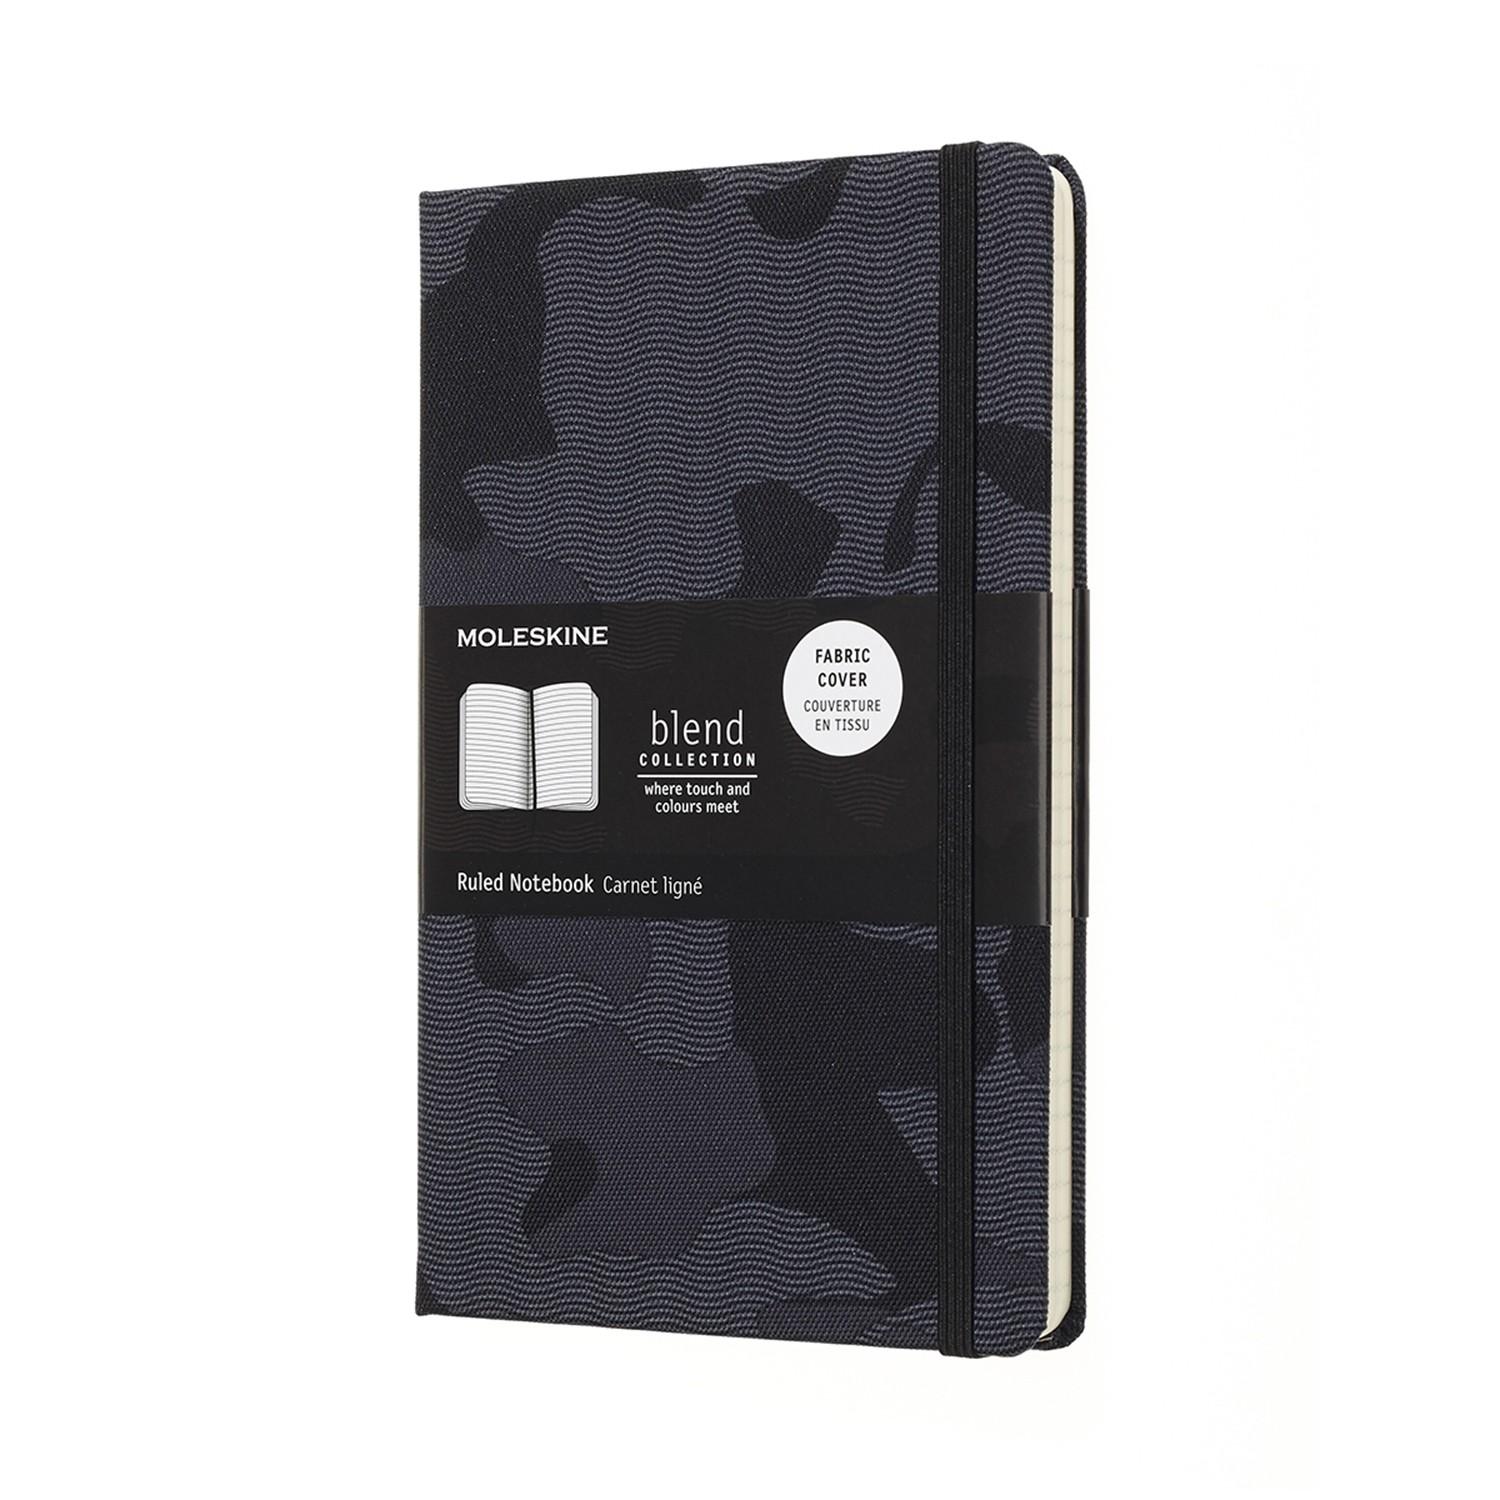 Moleskine Limited Collection Notebook Blend 18 LarGE RULED CAMOUFLAGE BLACK